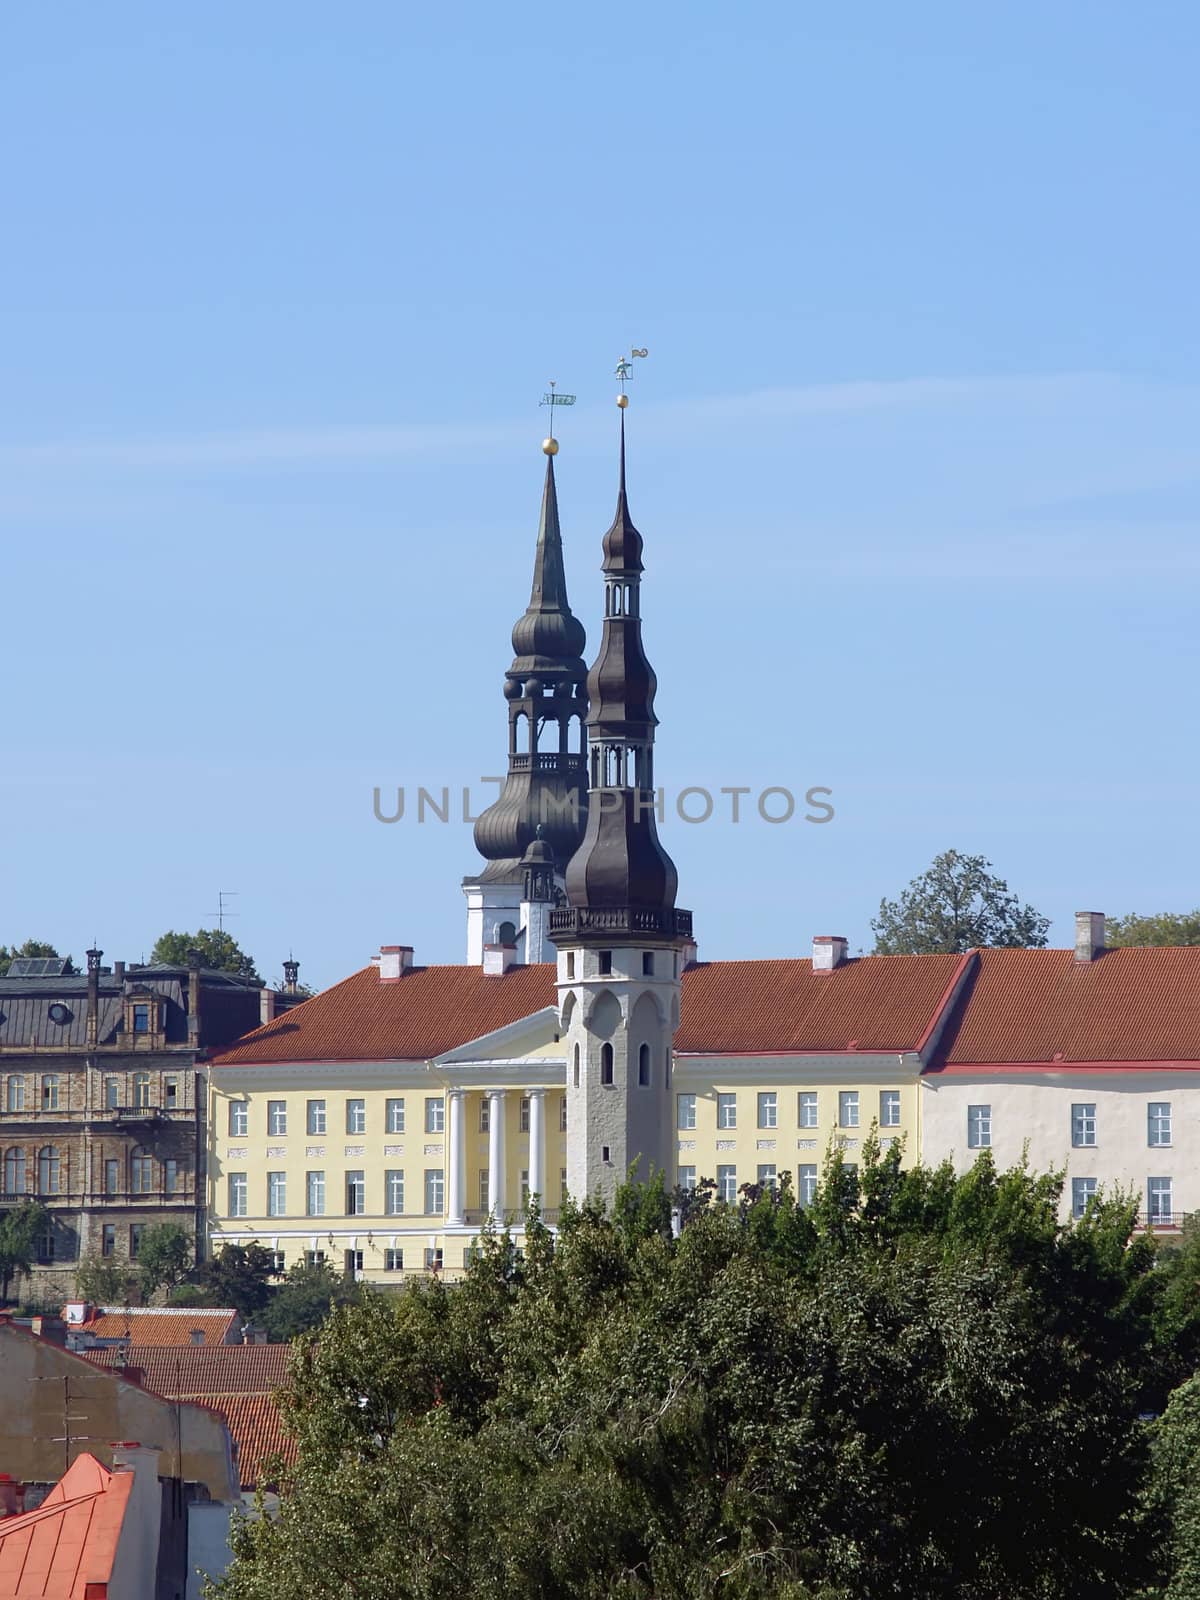 The Tallinn town hall and church St Nicholas by lem